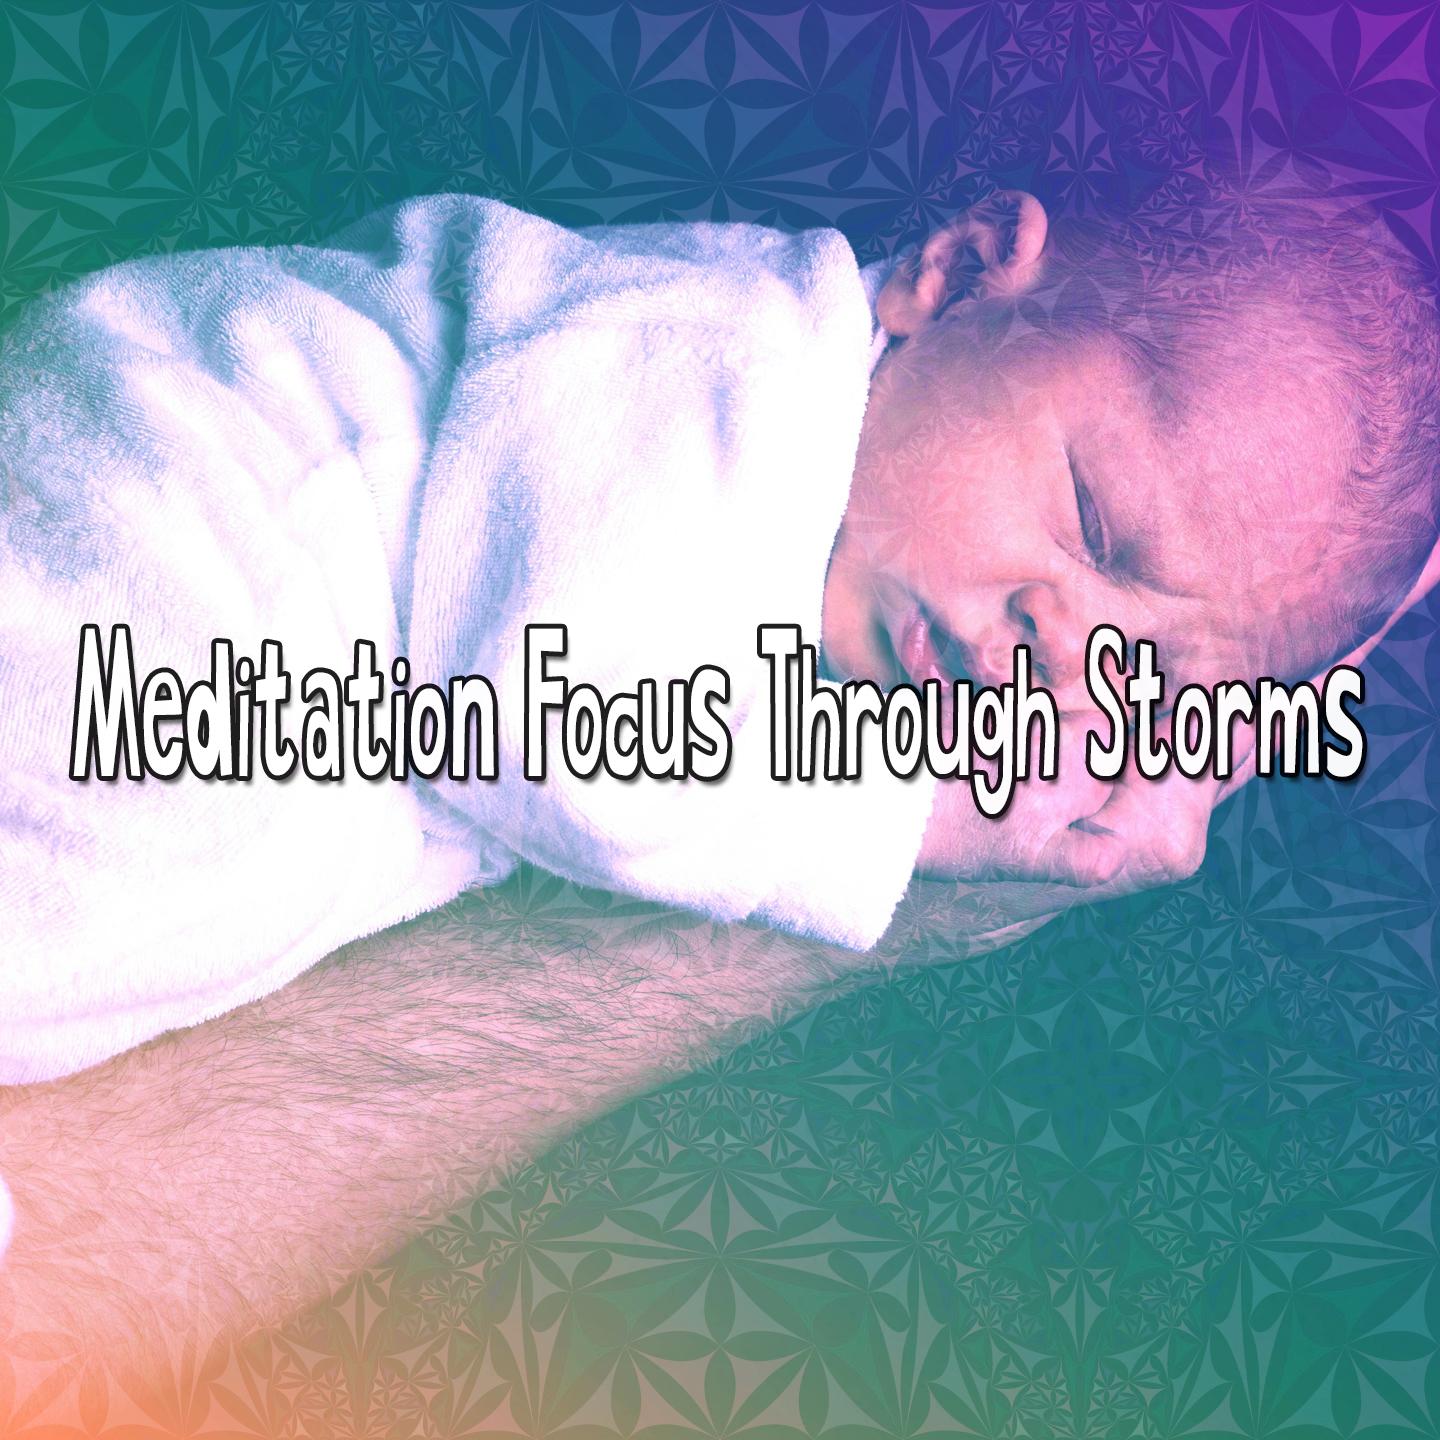 Meditation Focus Through Storms